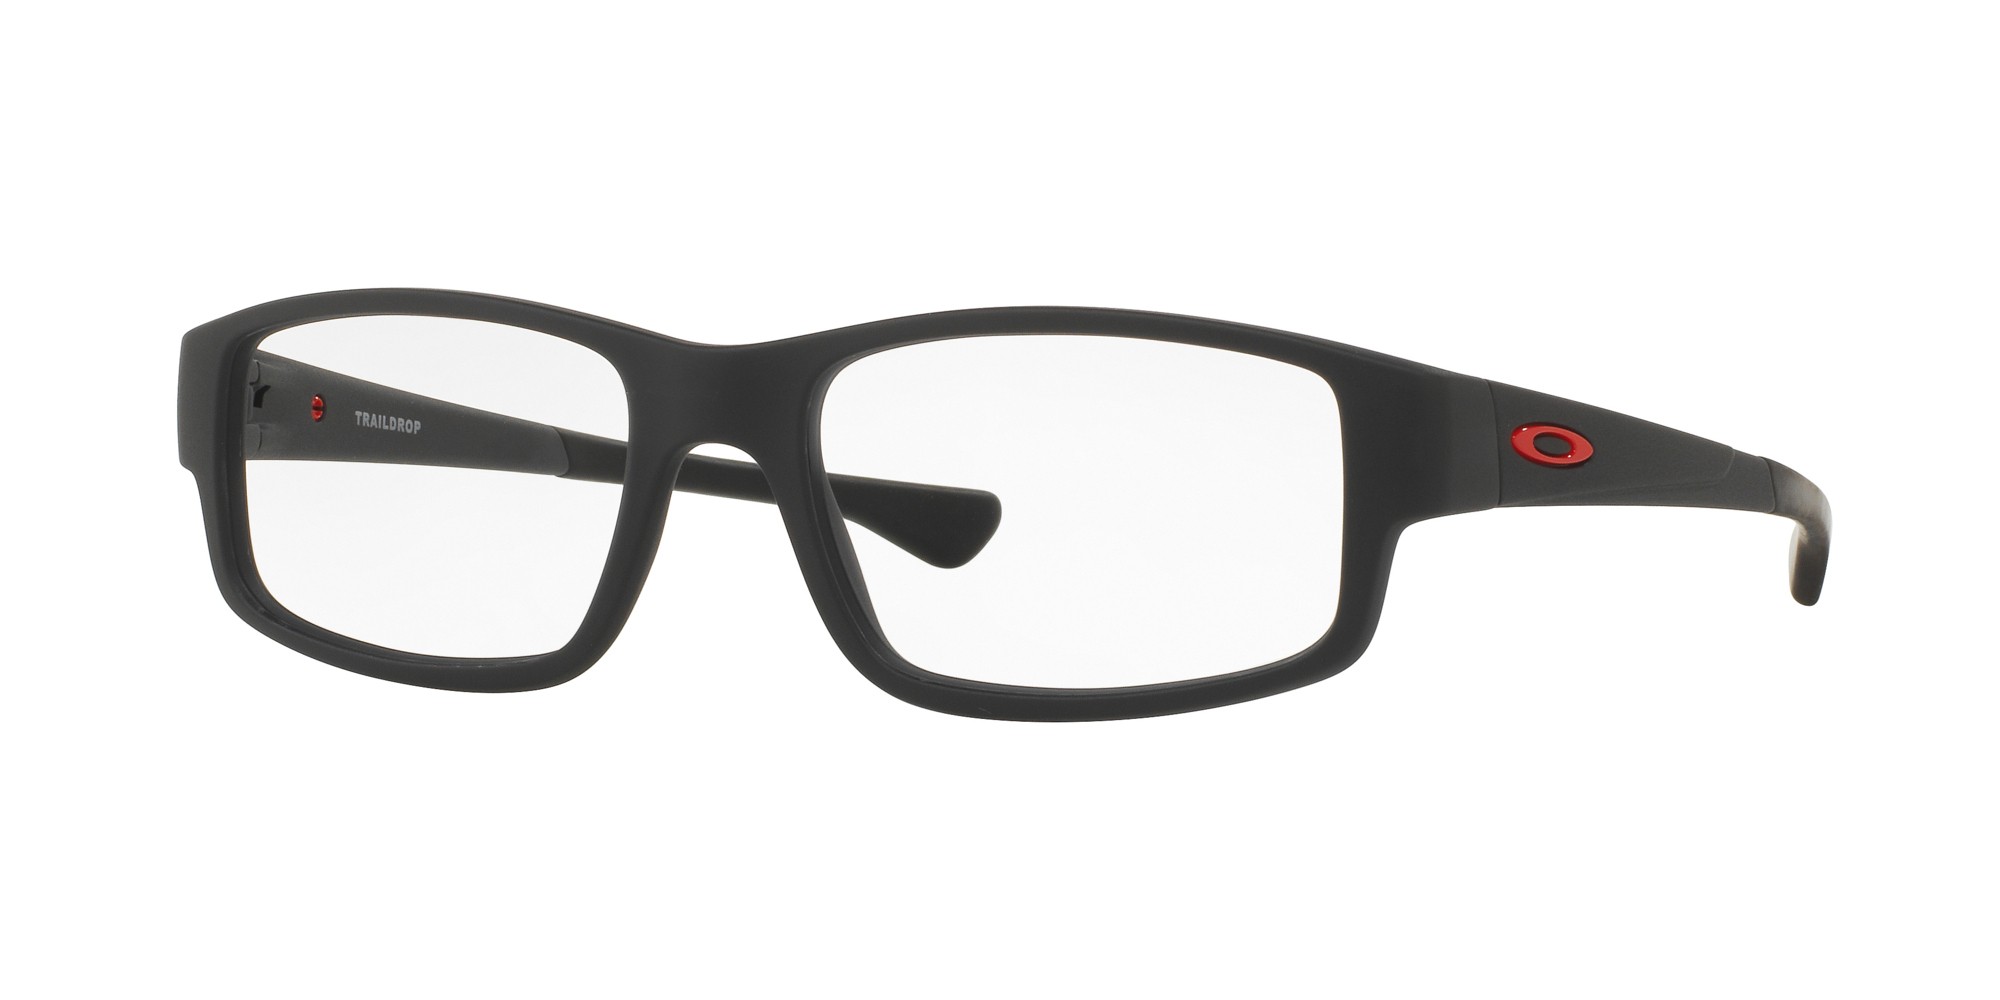 Authentic Oakley Traildrop Glasses